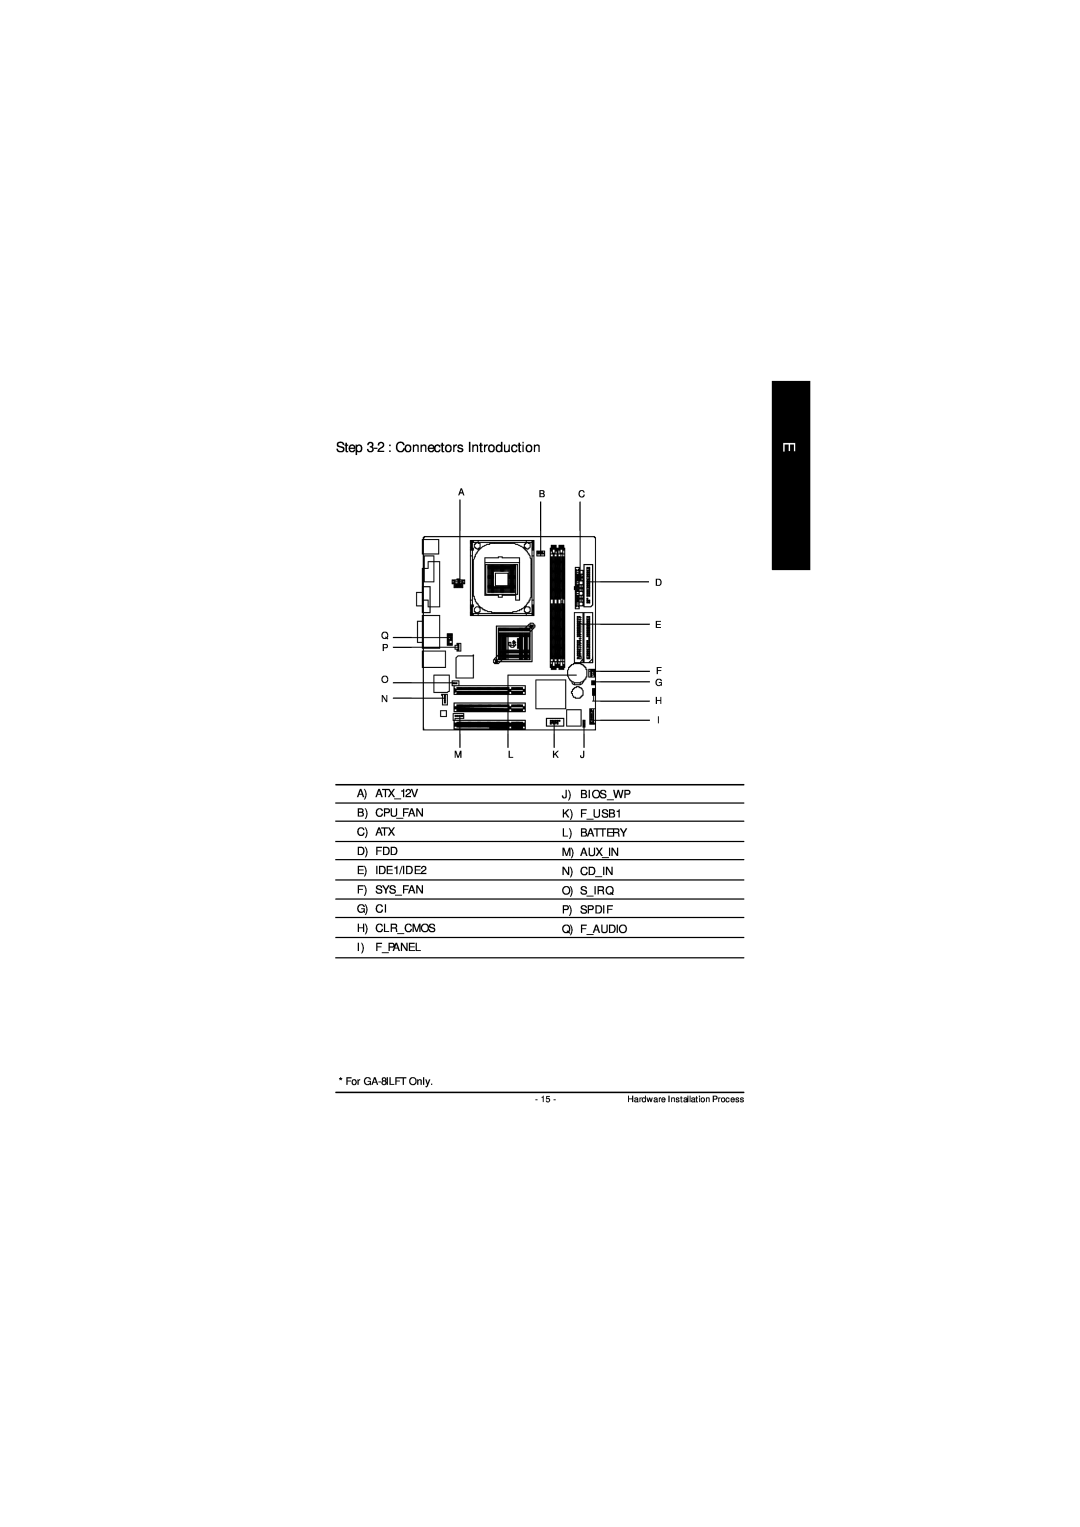 Gigabyte GA-8ILFT, P4 Titan-DDR Motherboard user manual 